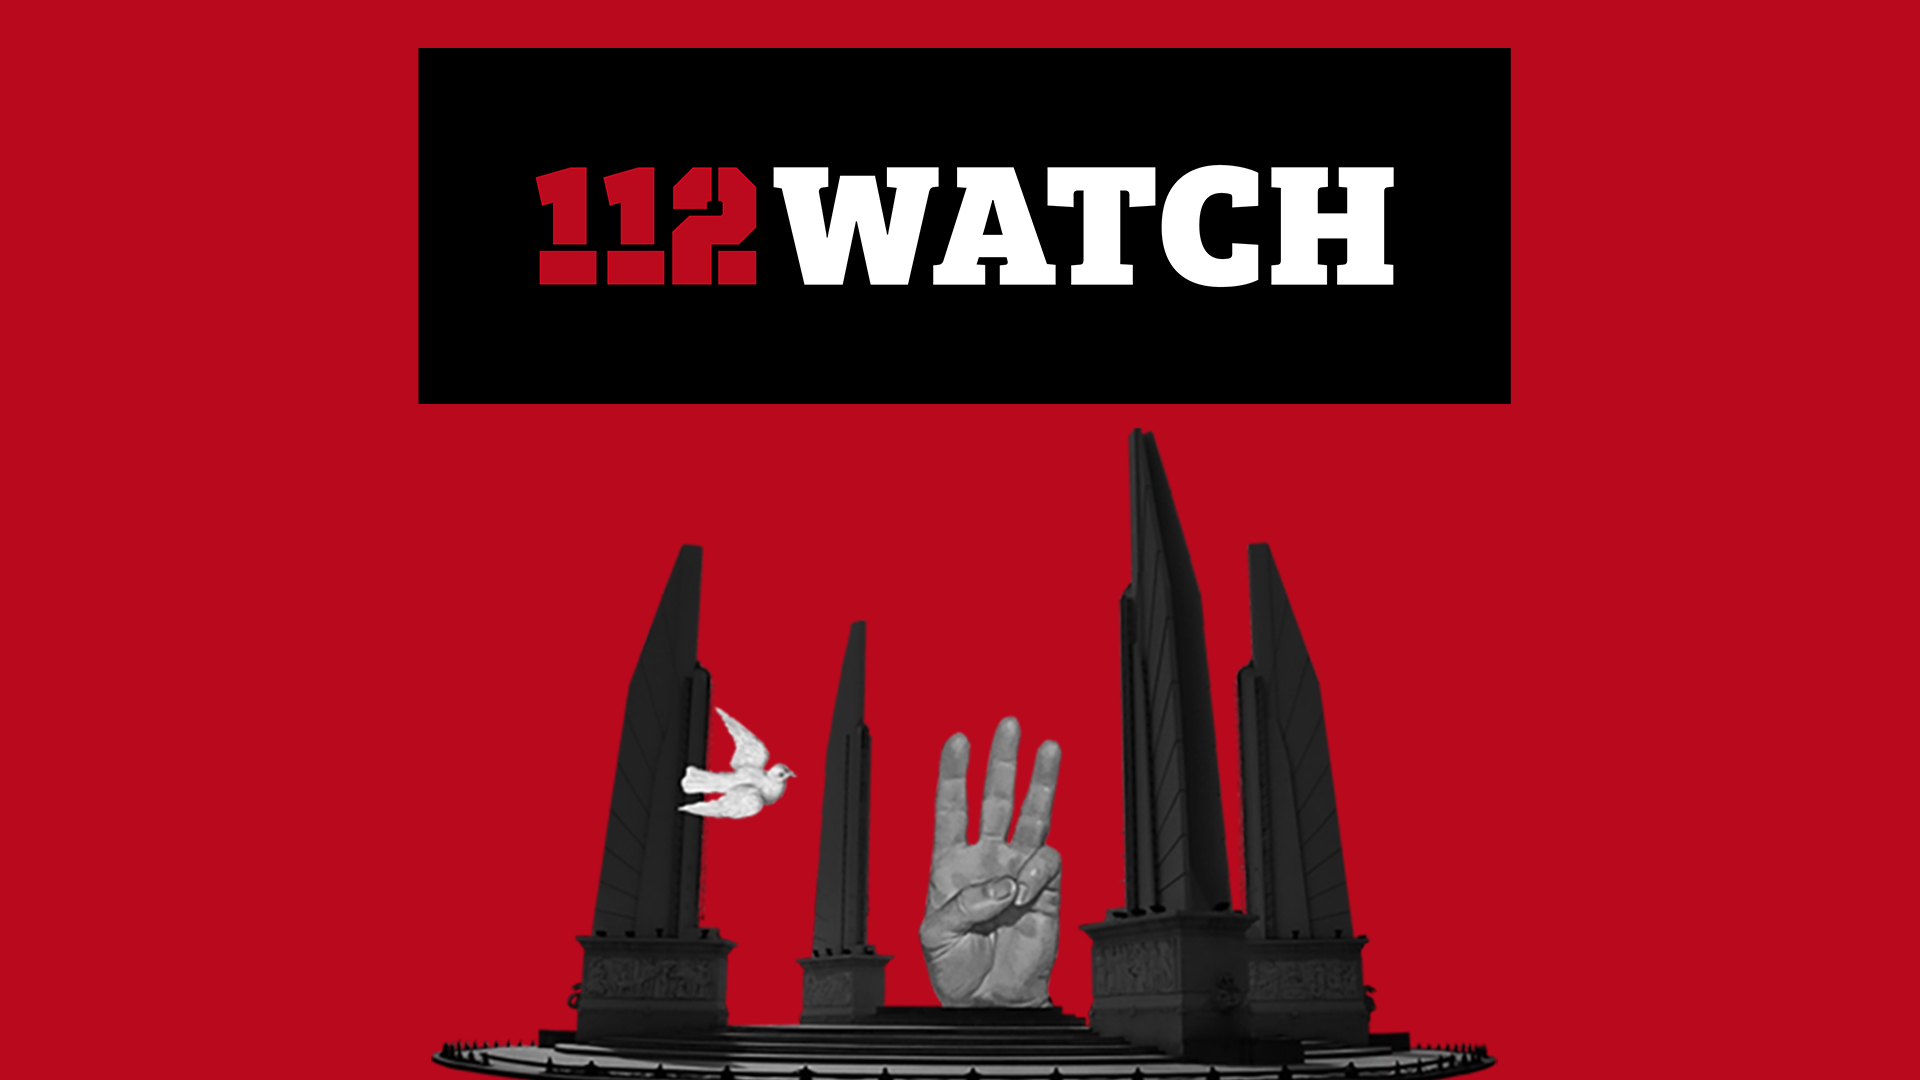 112 Watch Special Report